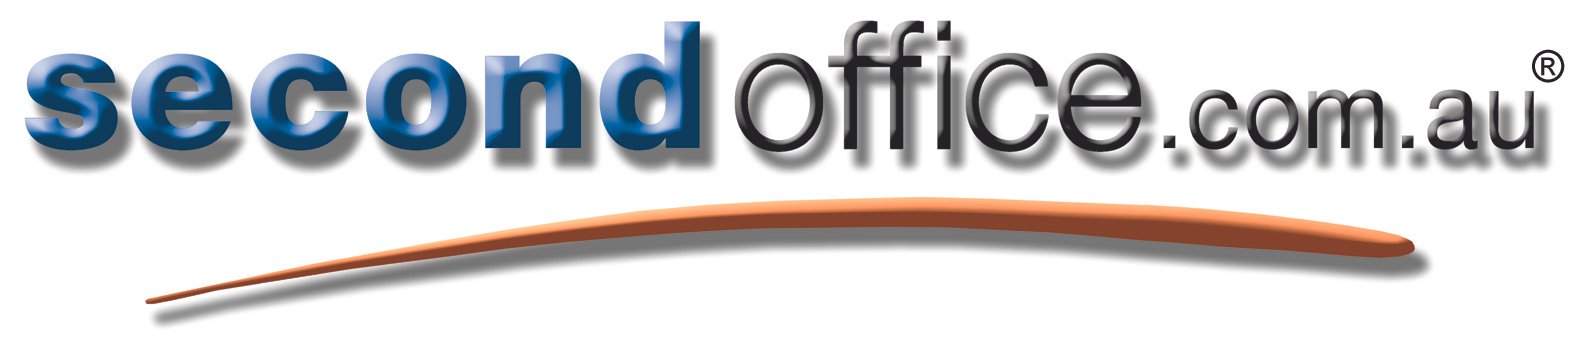 Second Office Logo with R jpeg.jpg